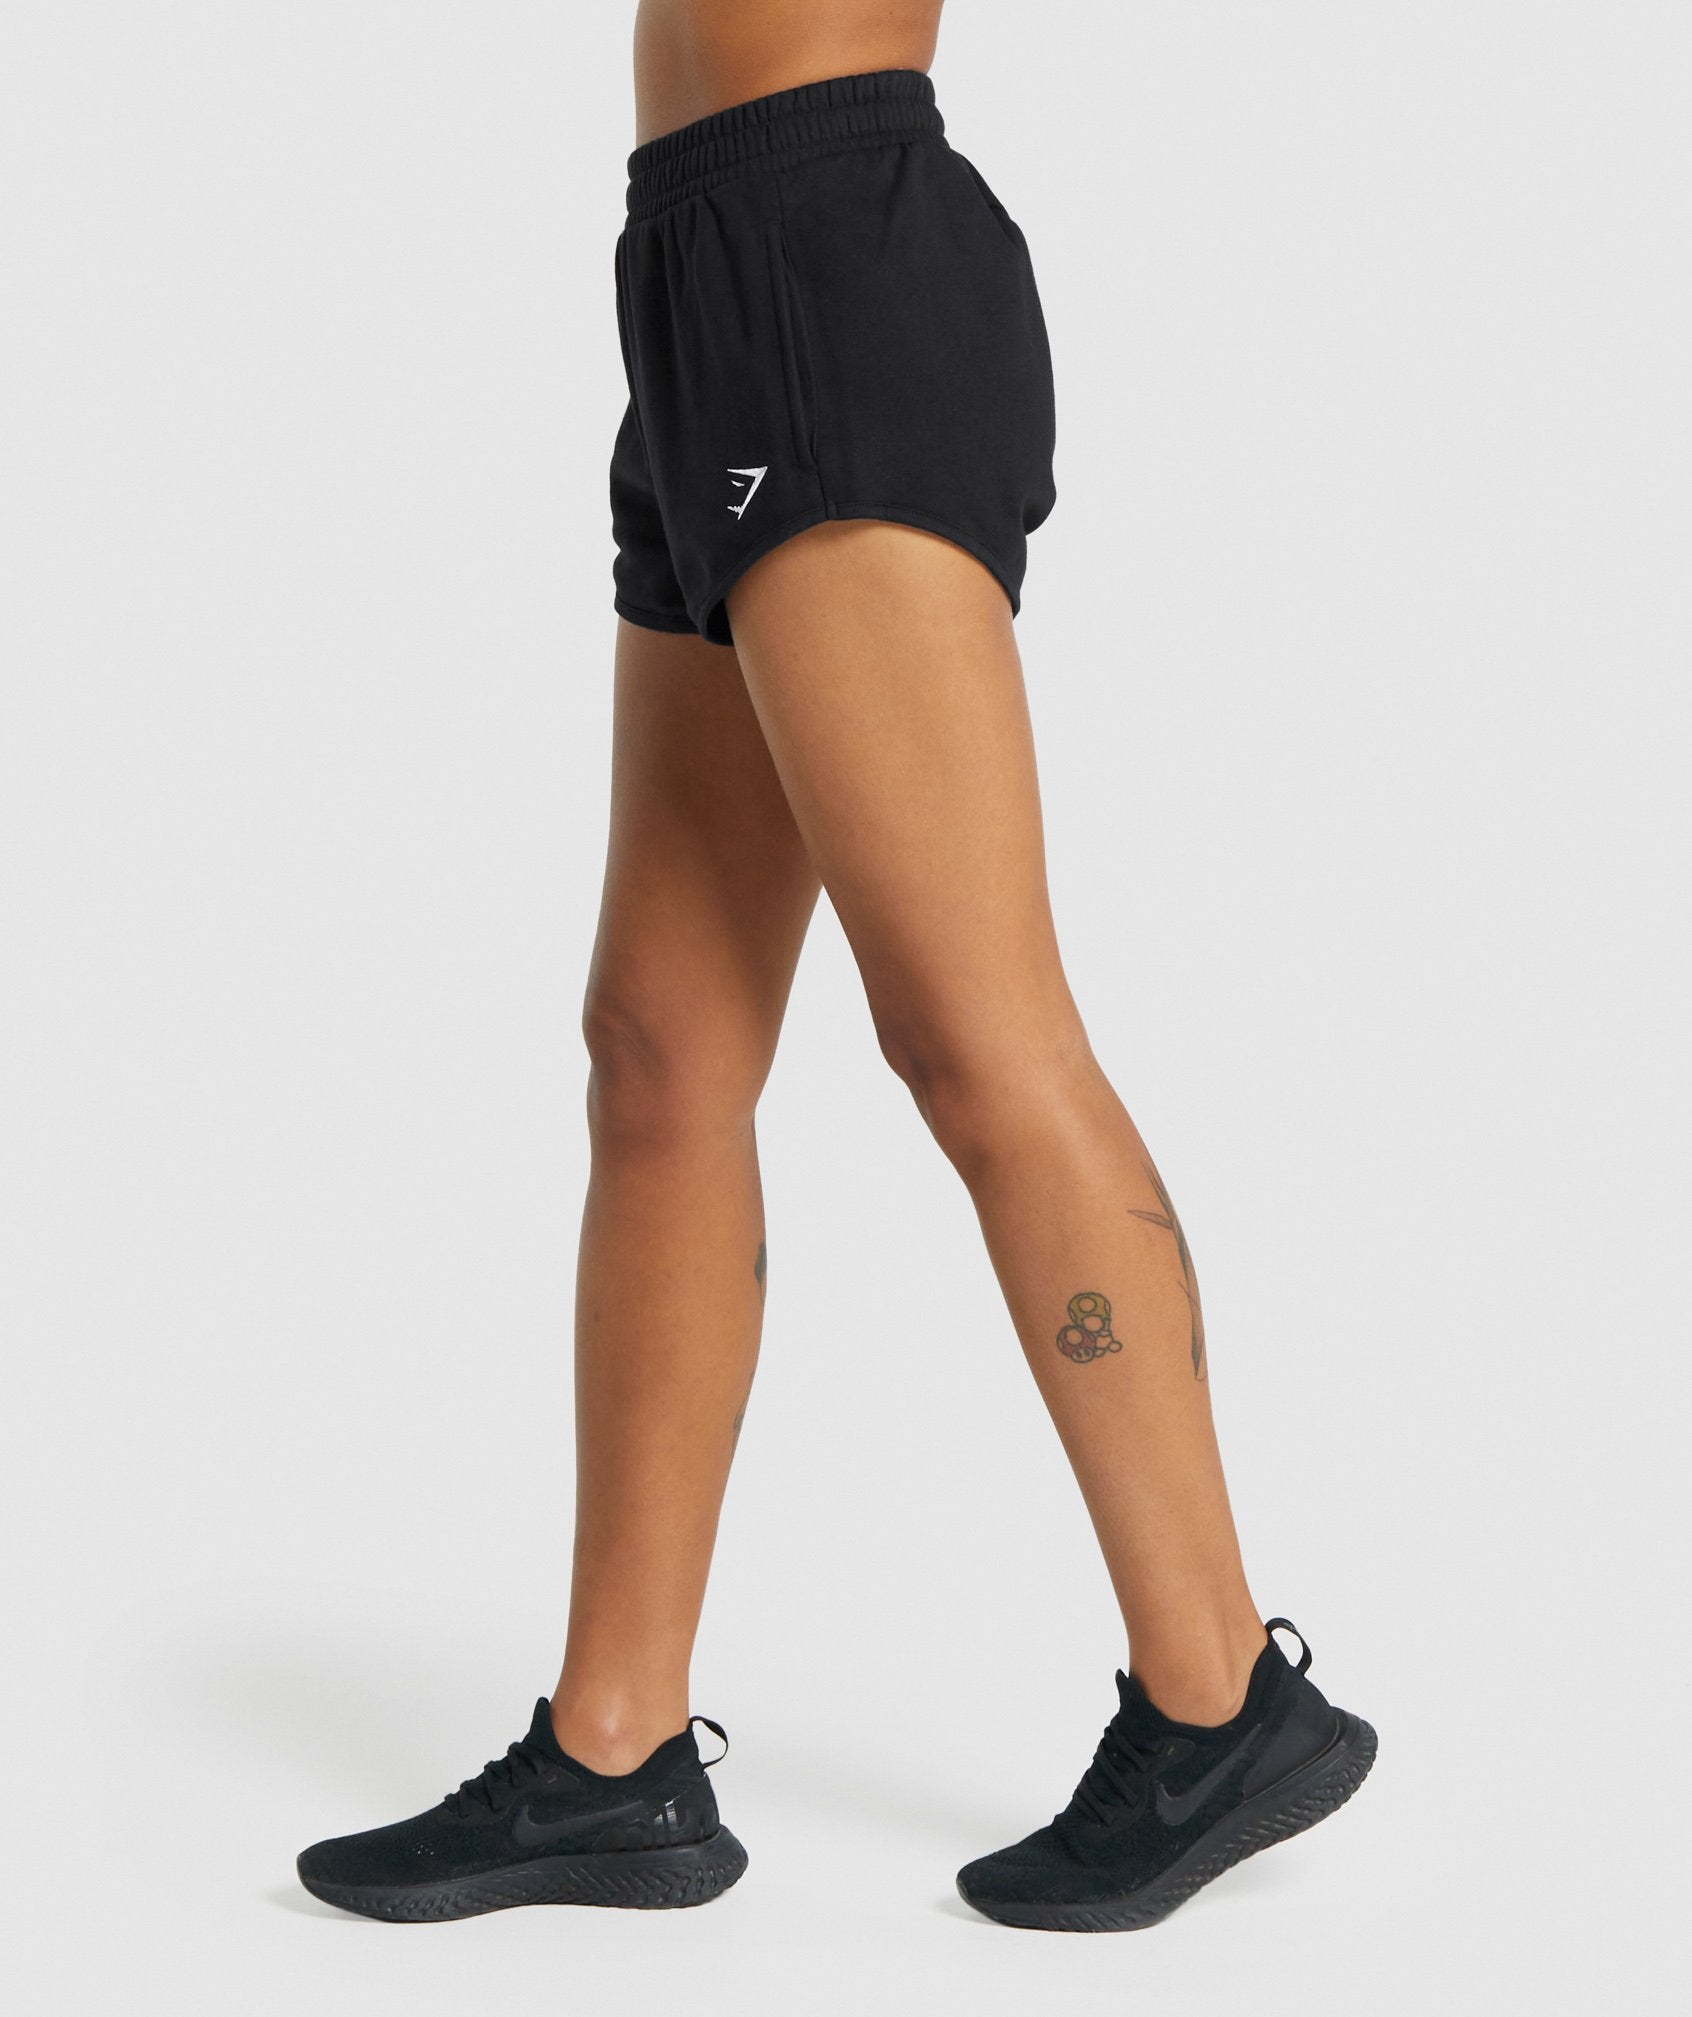 Gymshark Gymshark Shorts Womens Medium Black Compression High Waist  Athletic Workout Gym